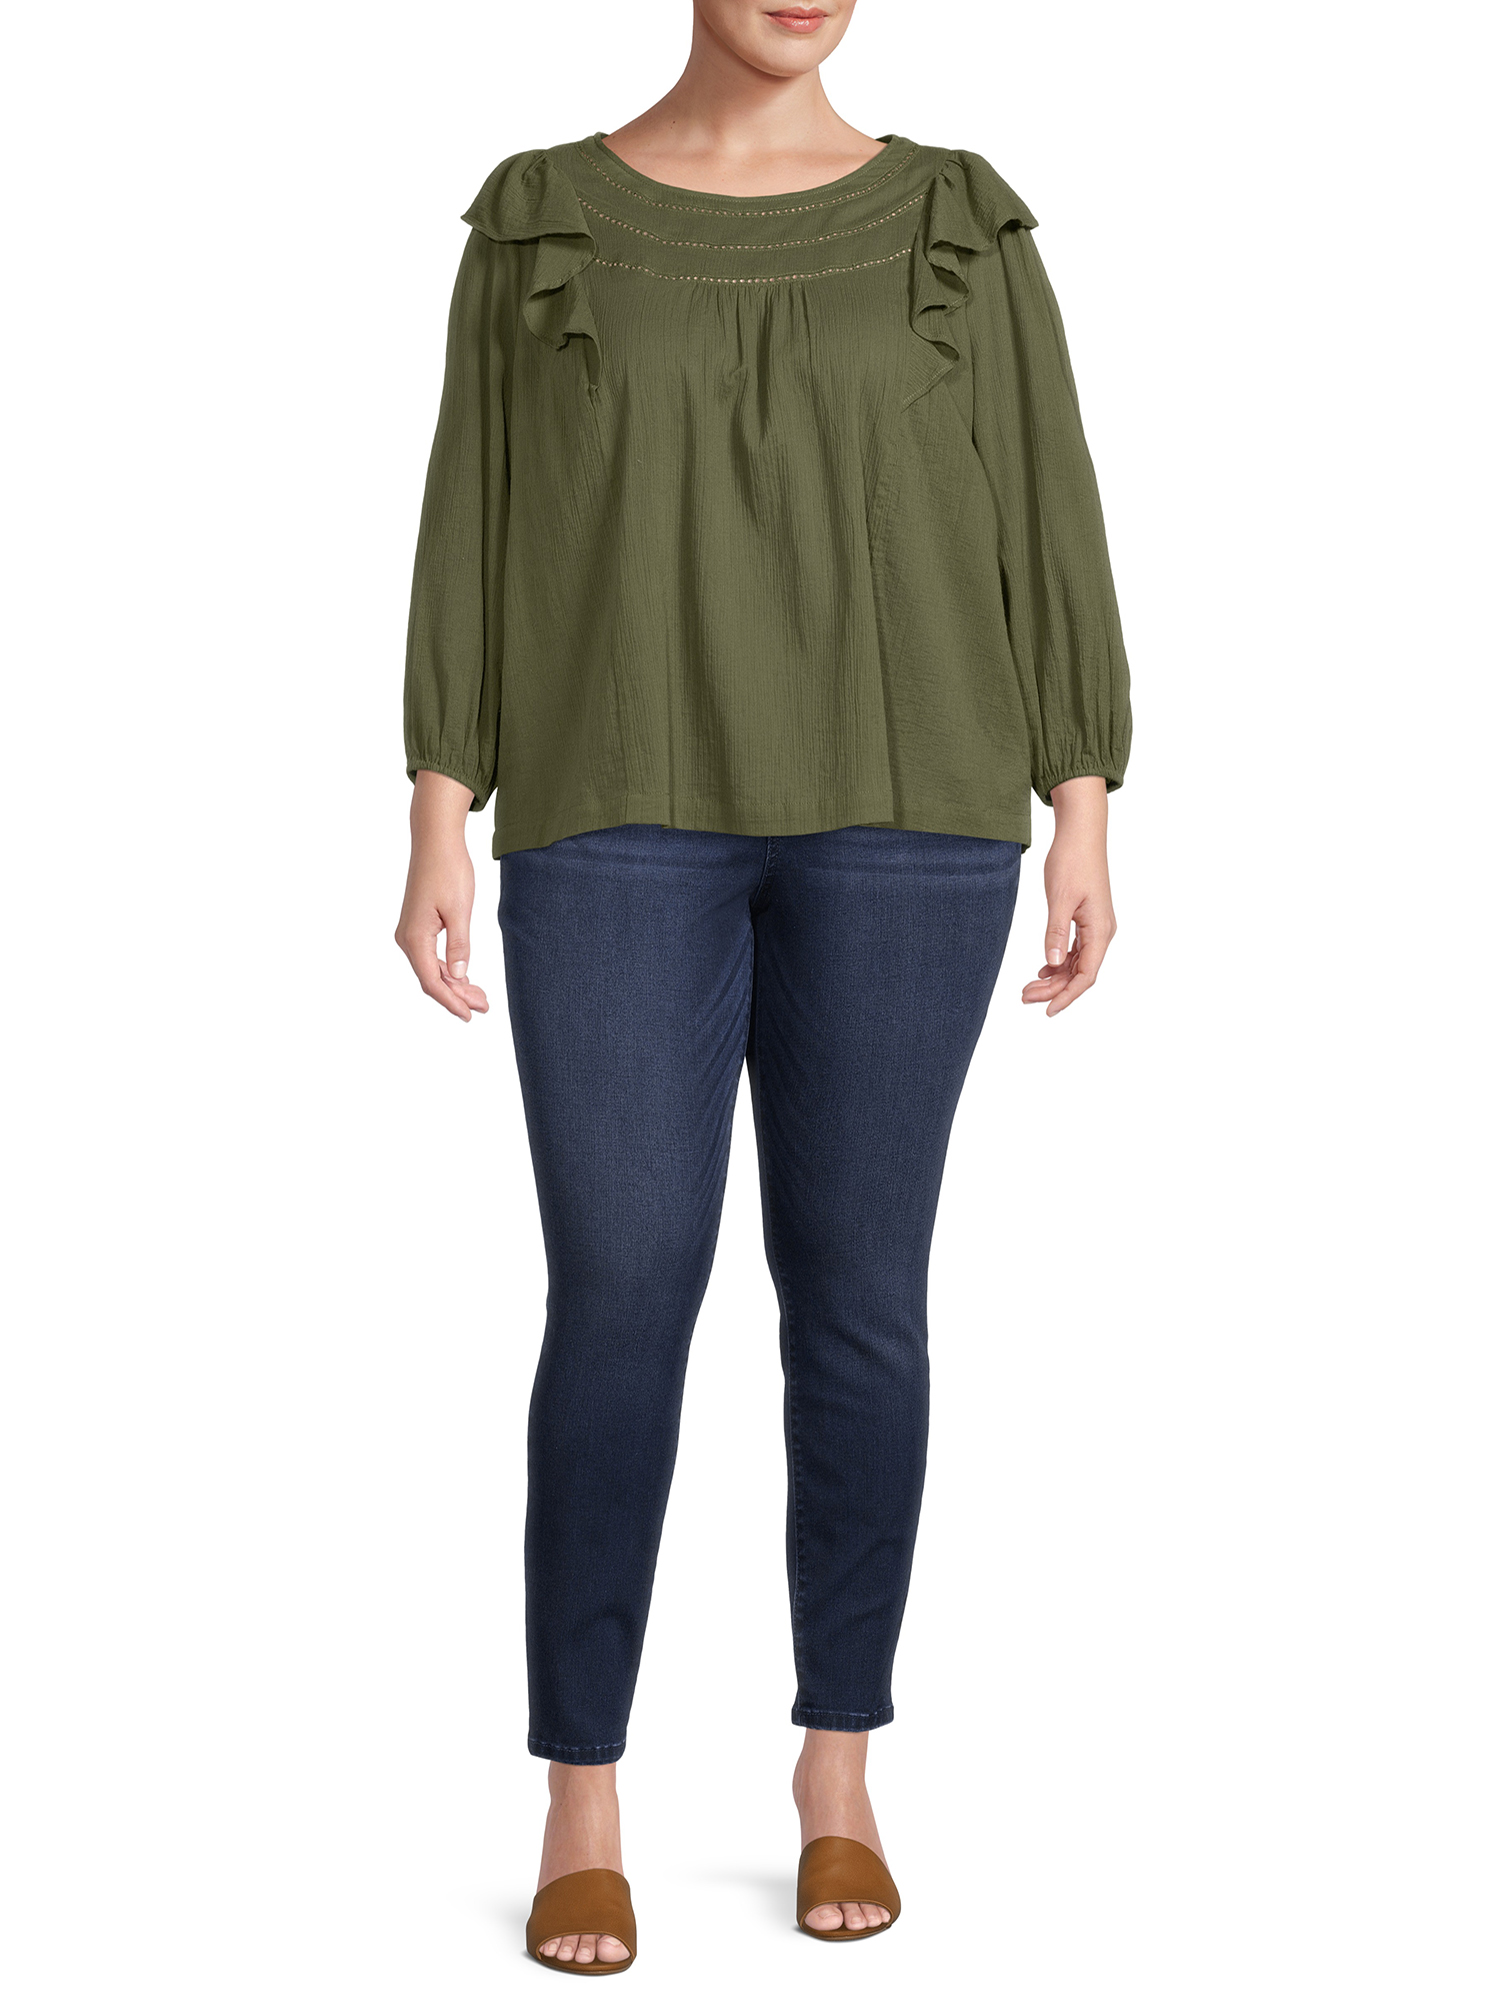 Terra & Sky Women's Plus Size Skinny Jeans, 29” Inseam - image 3 of 11